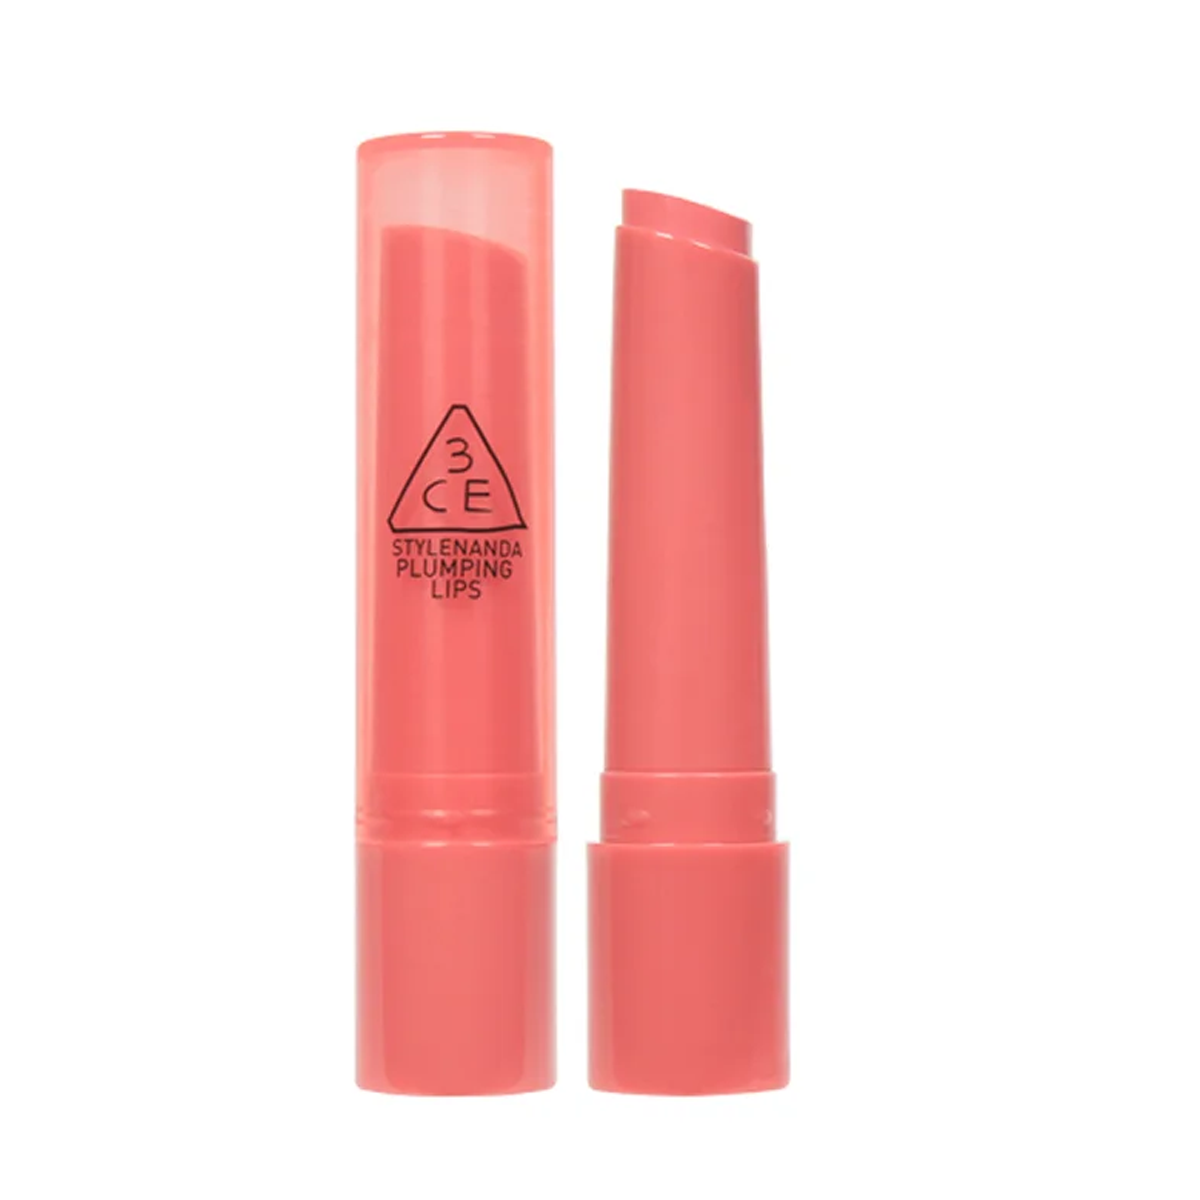 3CE - Plumping Lips - 5 Colors - Korea Lip Balm - Organic lipstick oil - Korea cosmetic and lipstick Gloss Glossy Hydrating Moisturize Makeup